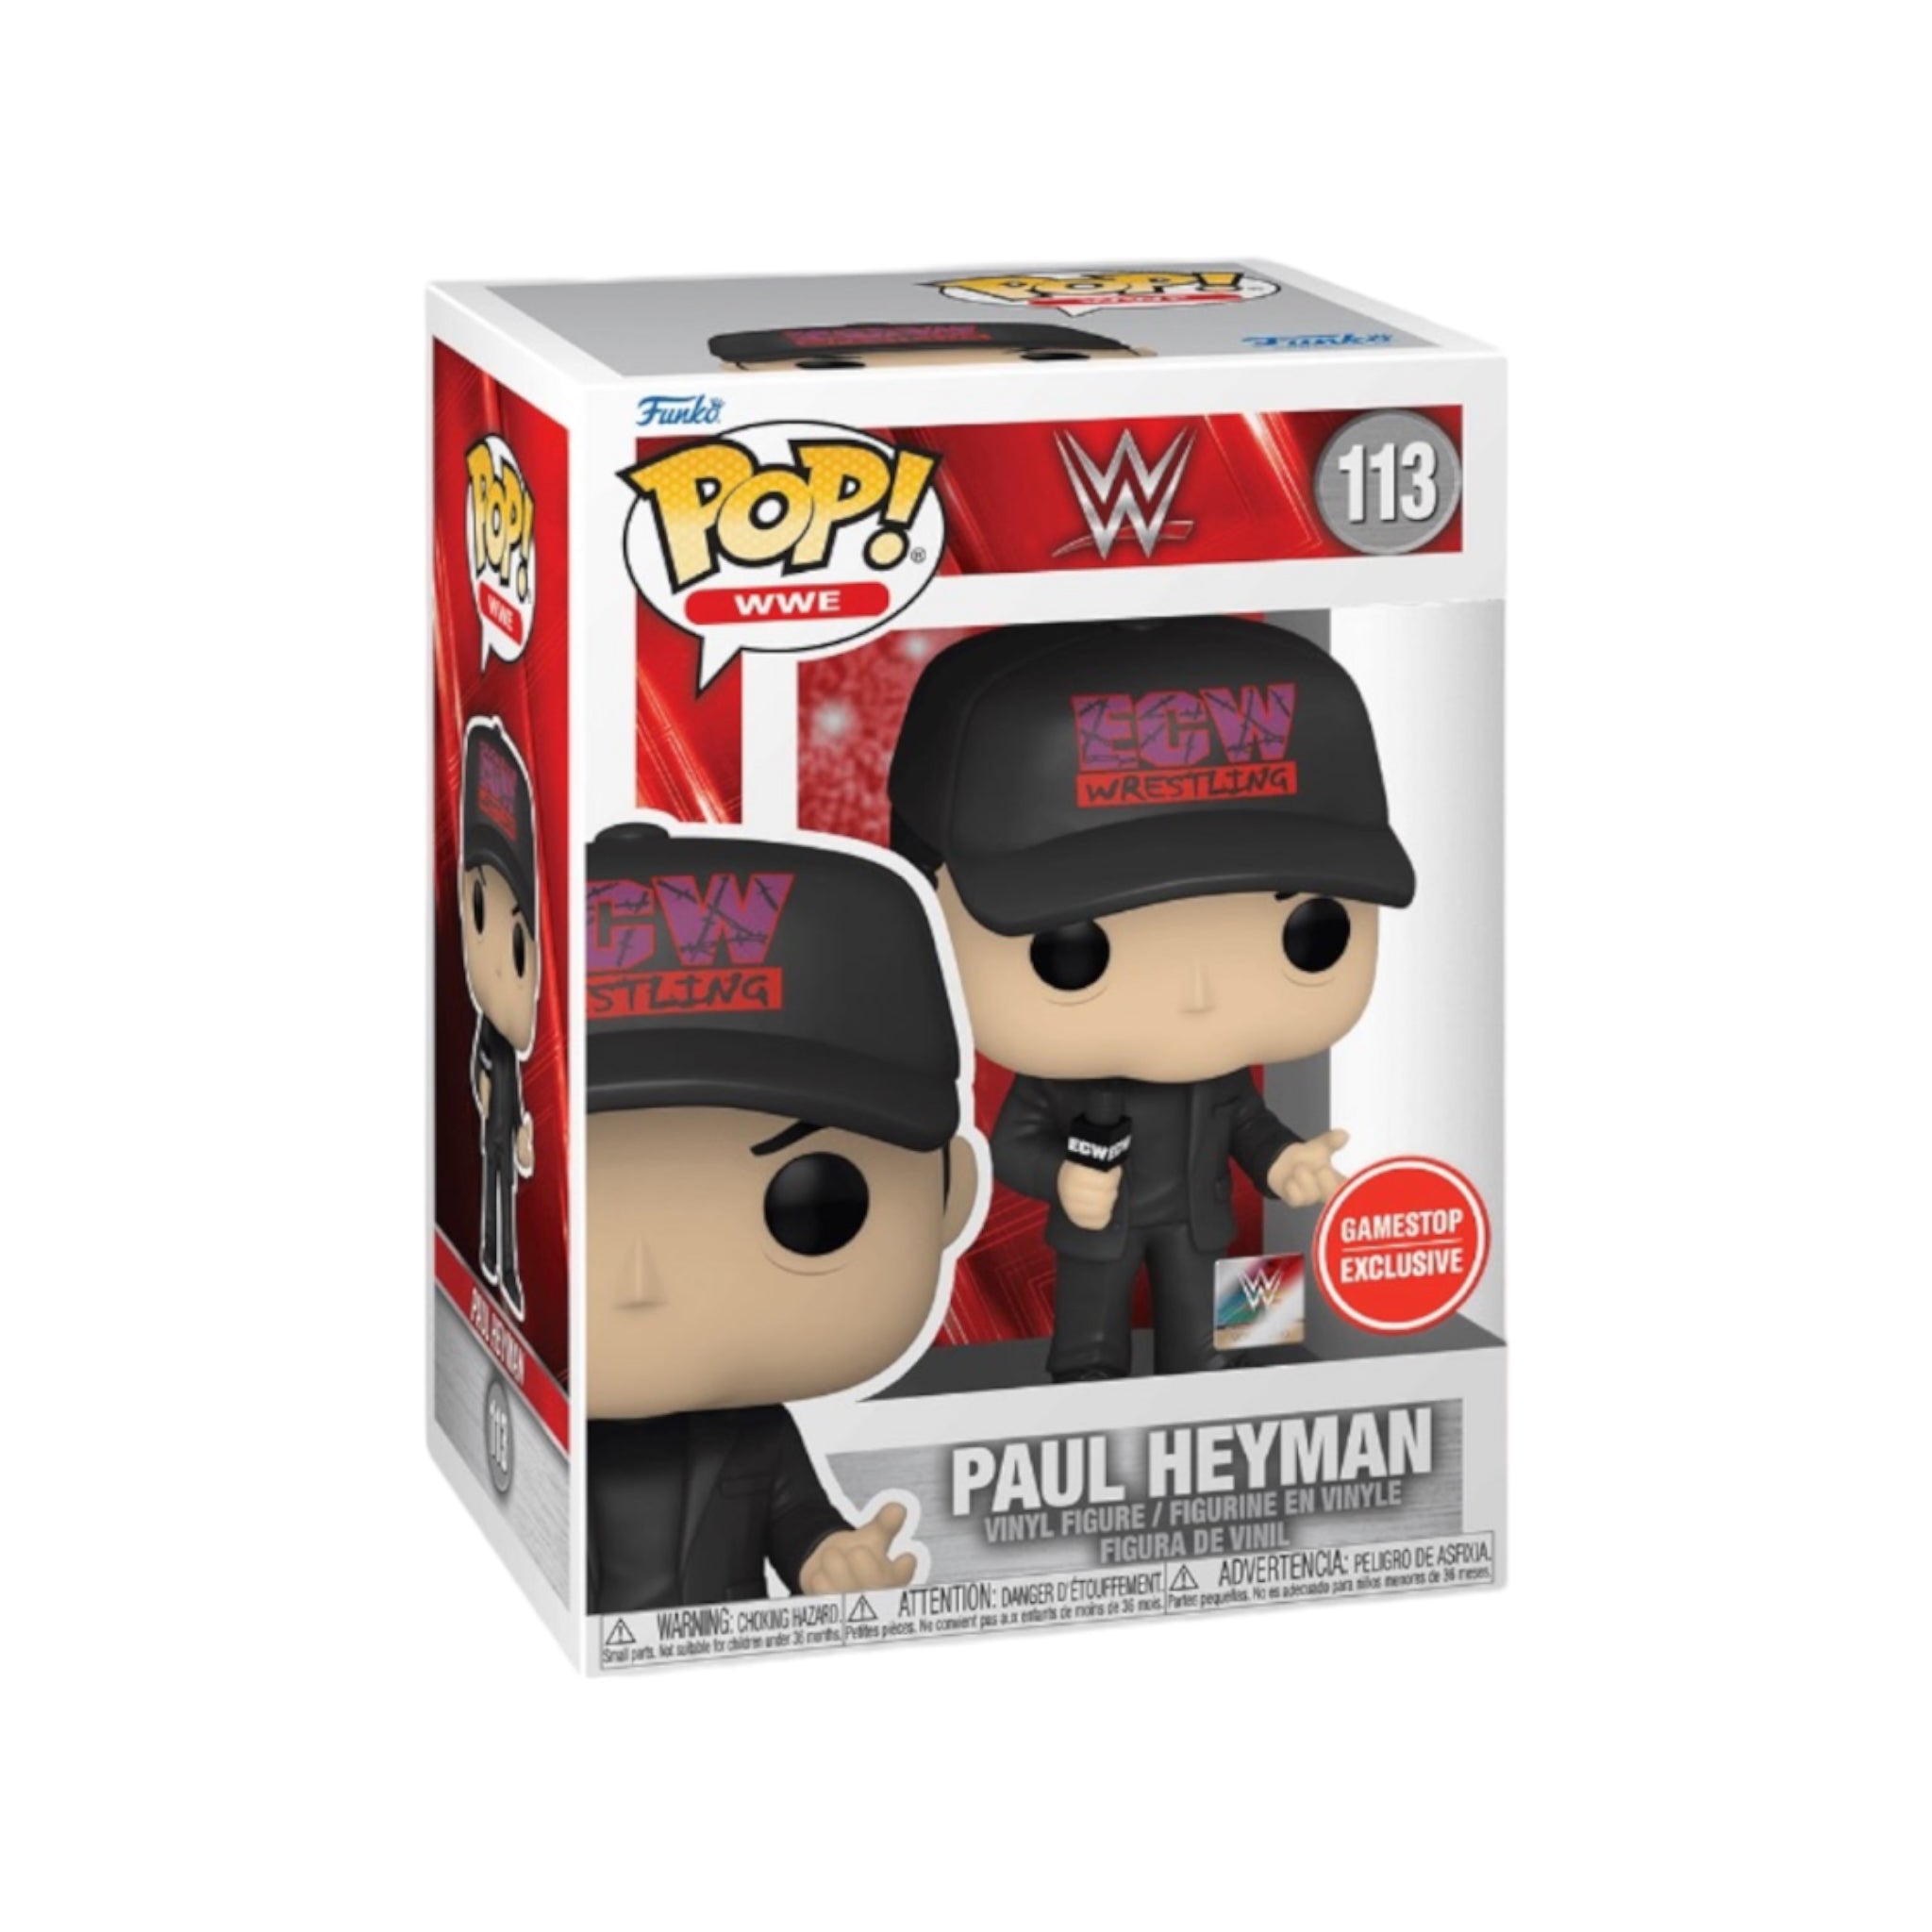 Paul Heyman #113 Funko Pop! - WWE - Gamestop Exclusive